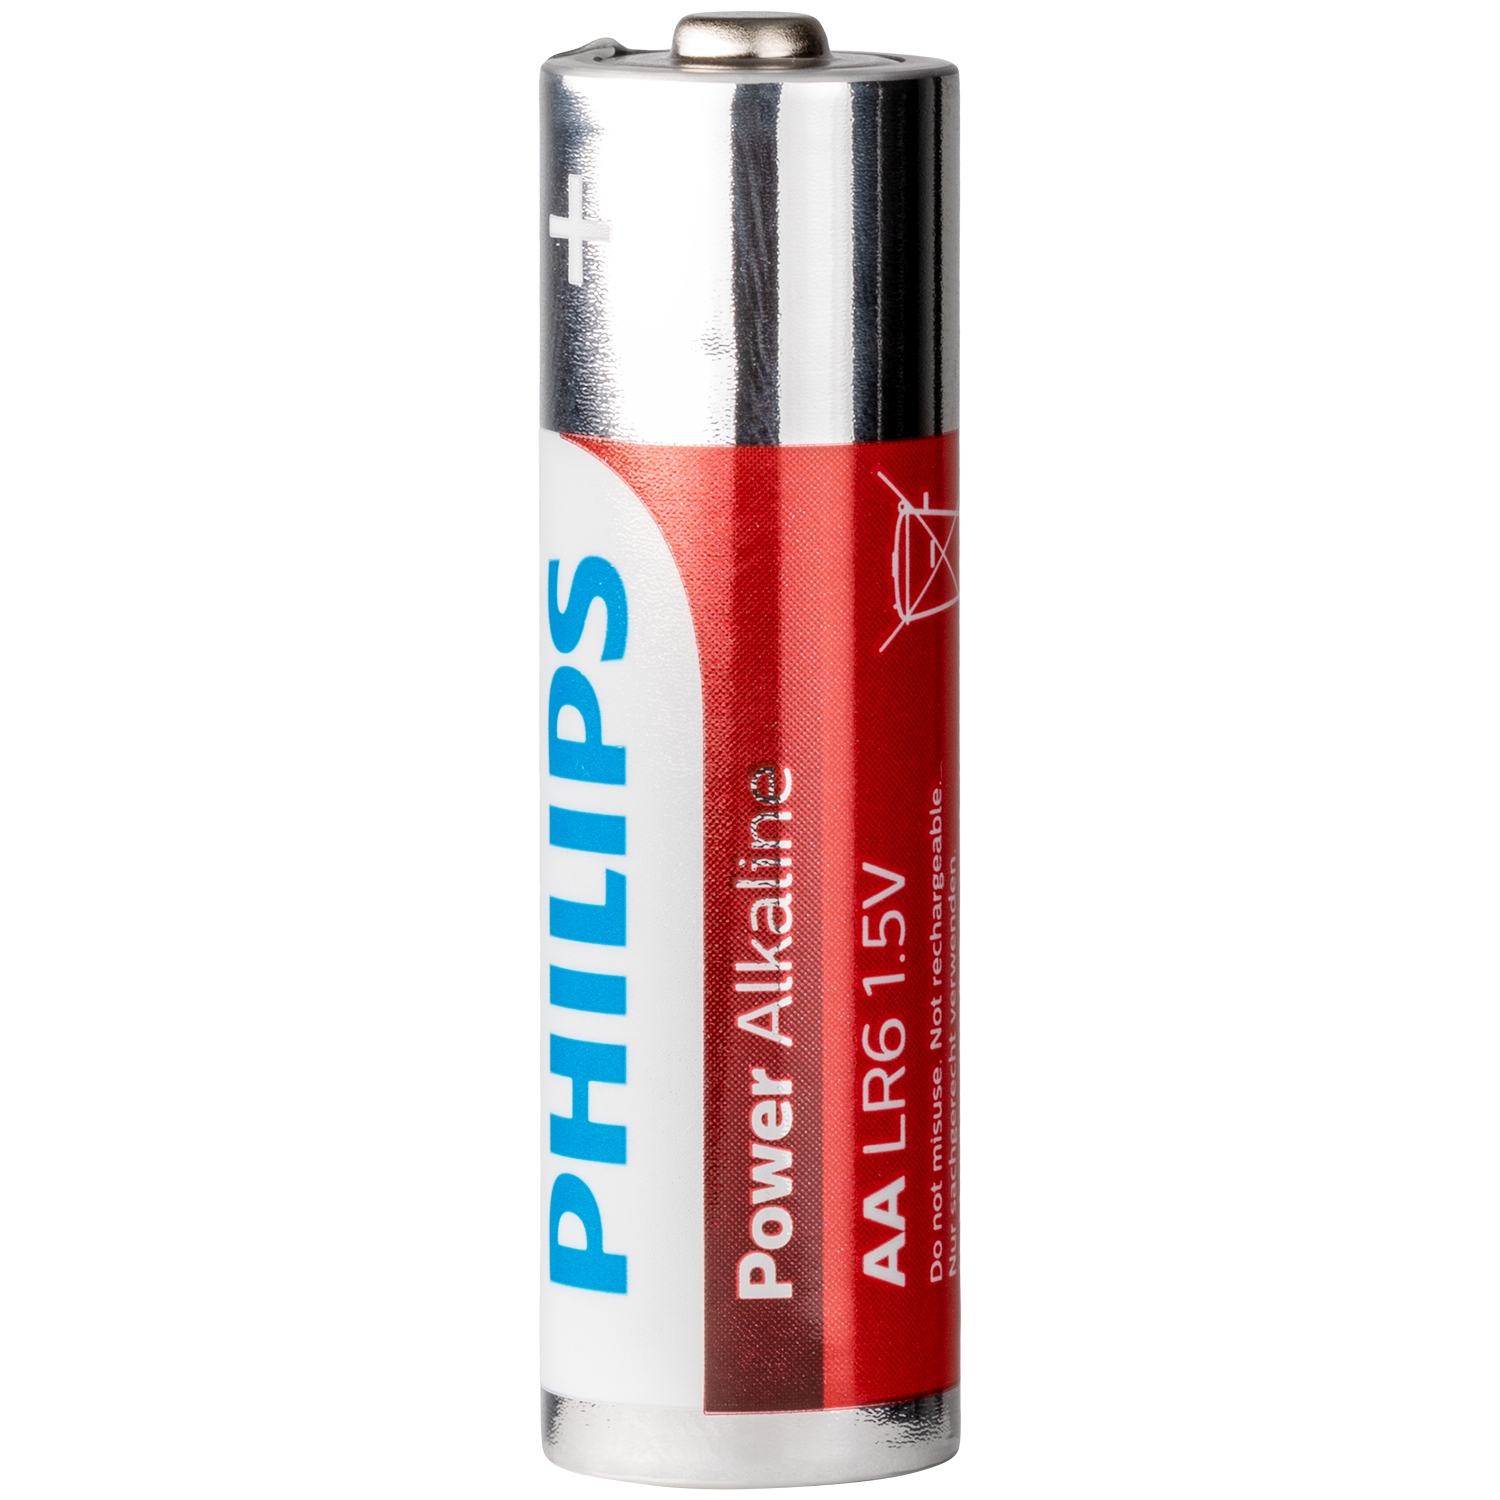 Philips - Pile Alcaline LR6 - AA x 4 1,5V 